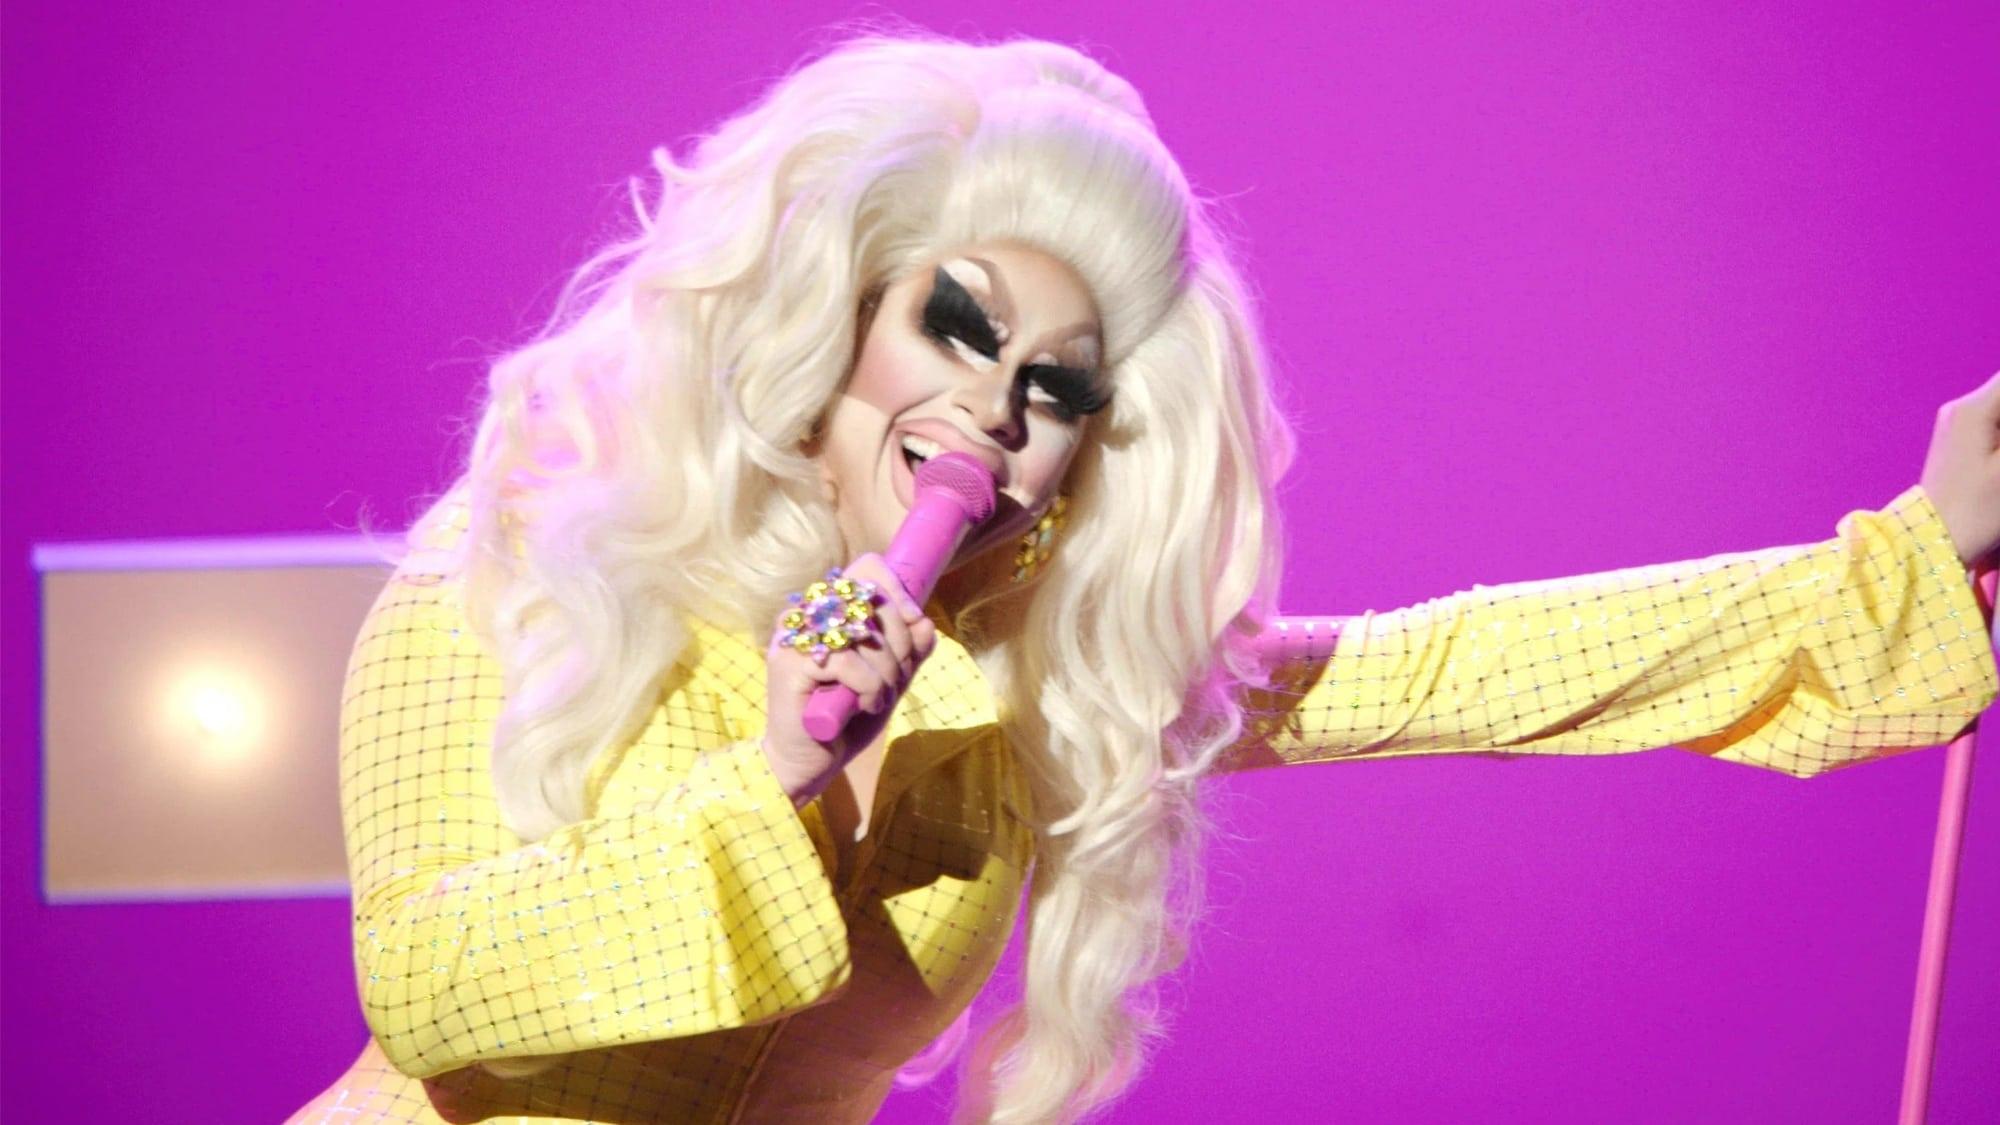 Trixie Mattel: Skinny Legend backdrop